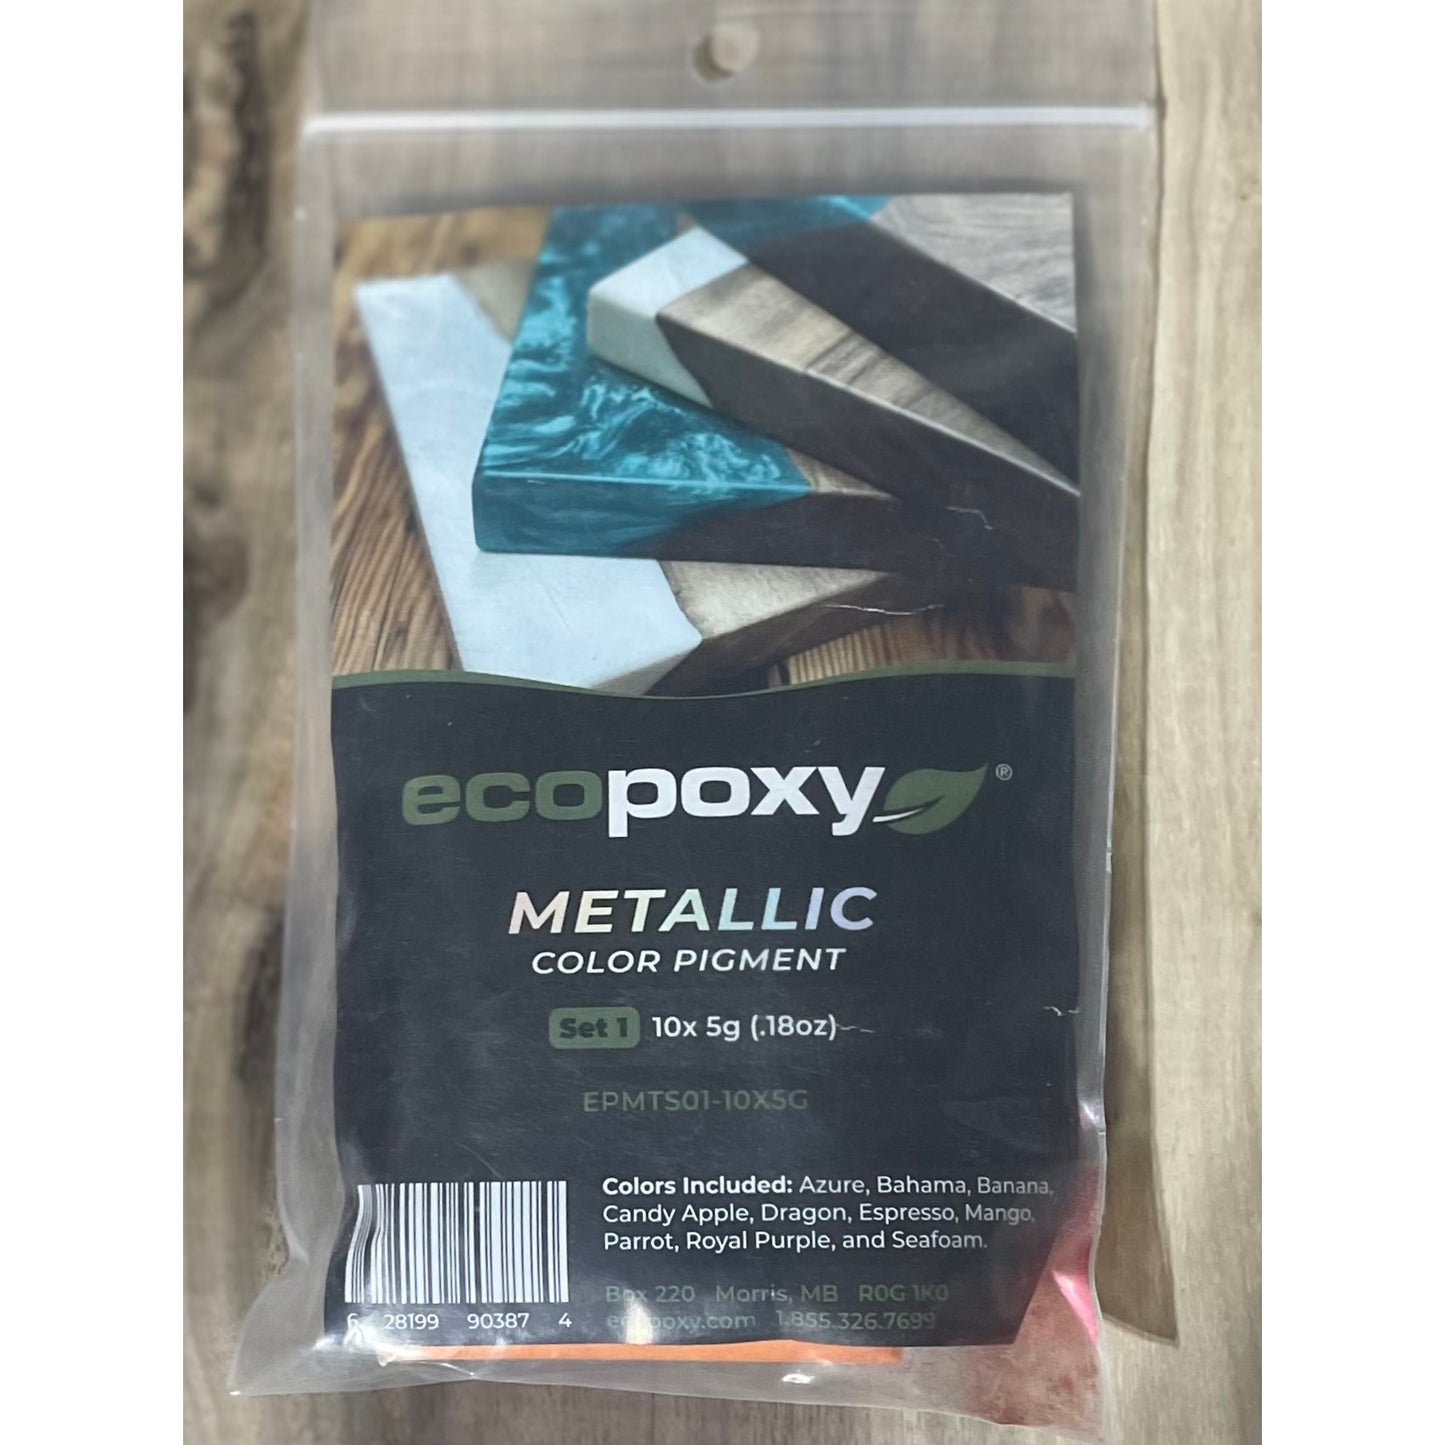 EcoPoxy Metallic Color Pigment Samples